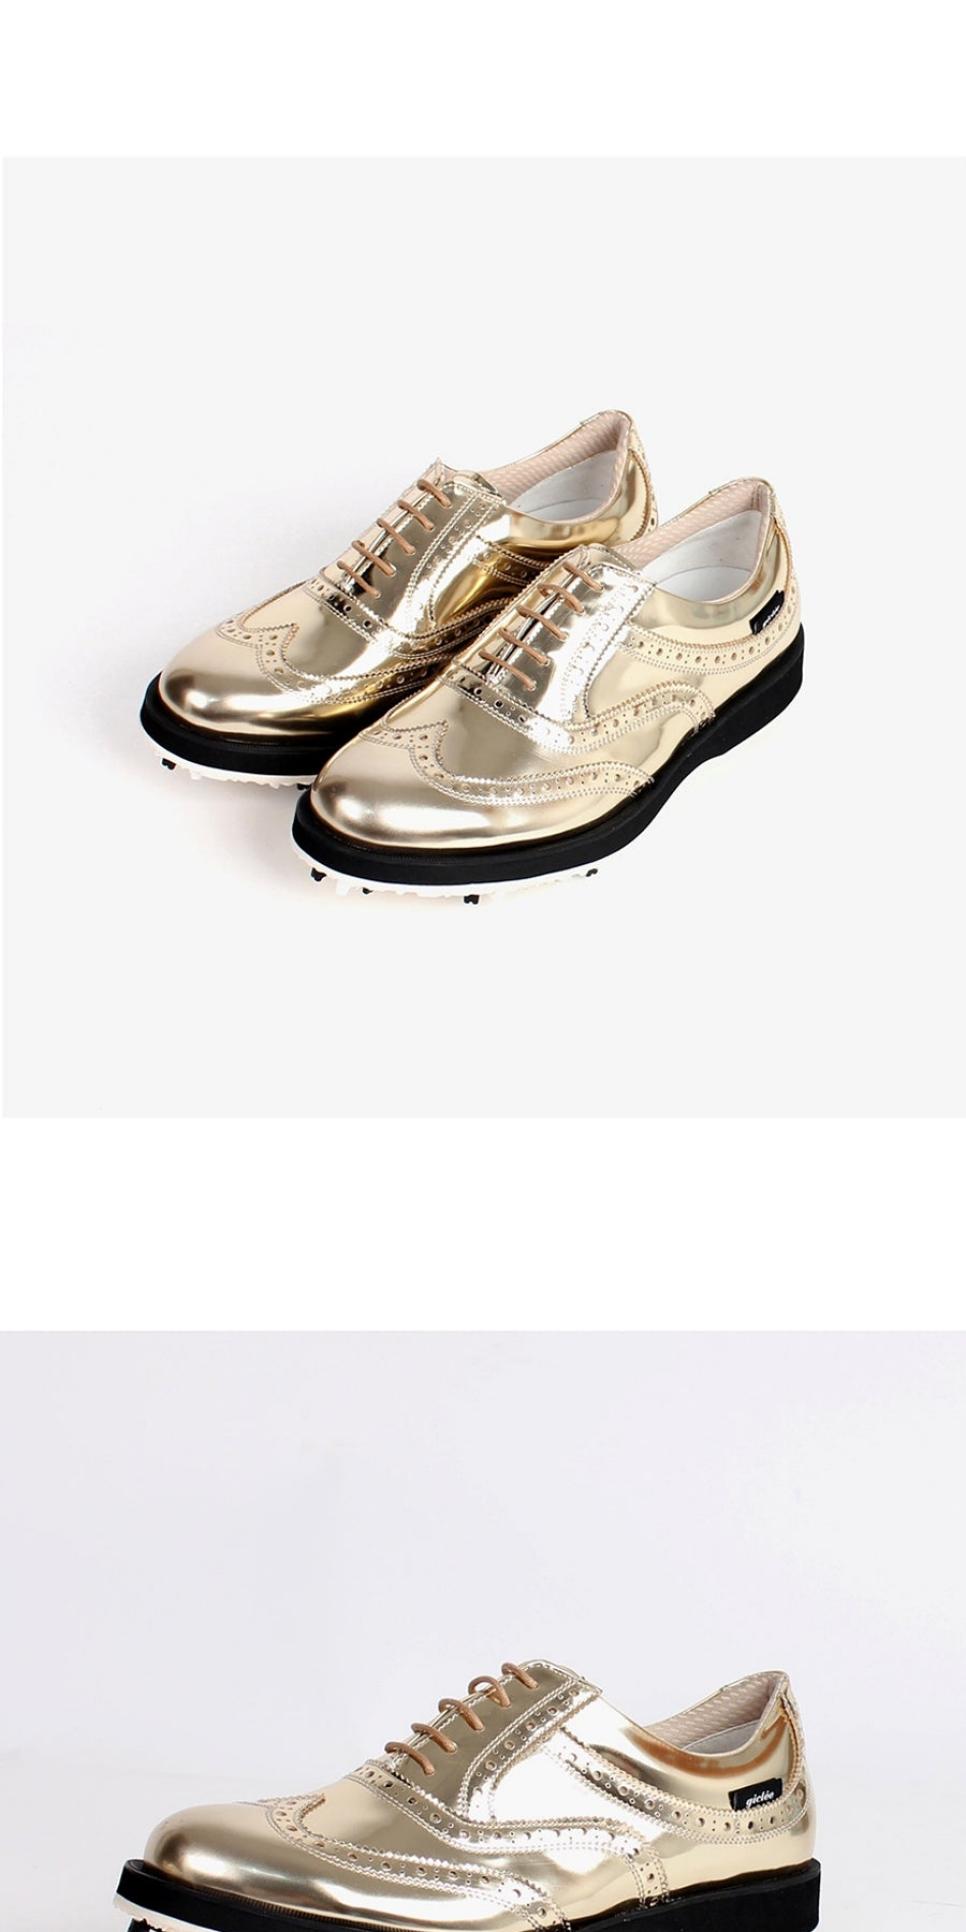 rx-sokimgiclee-unisex-no21-premium-leather-golf-shoes.jpeg